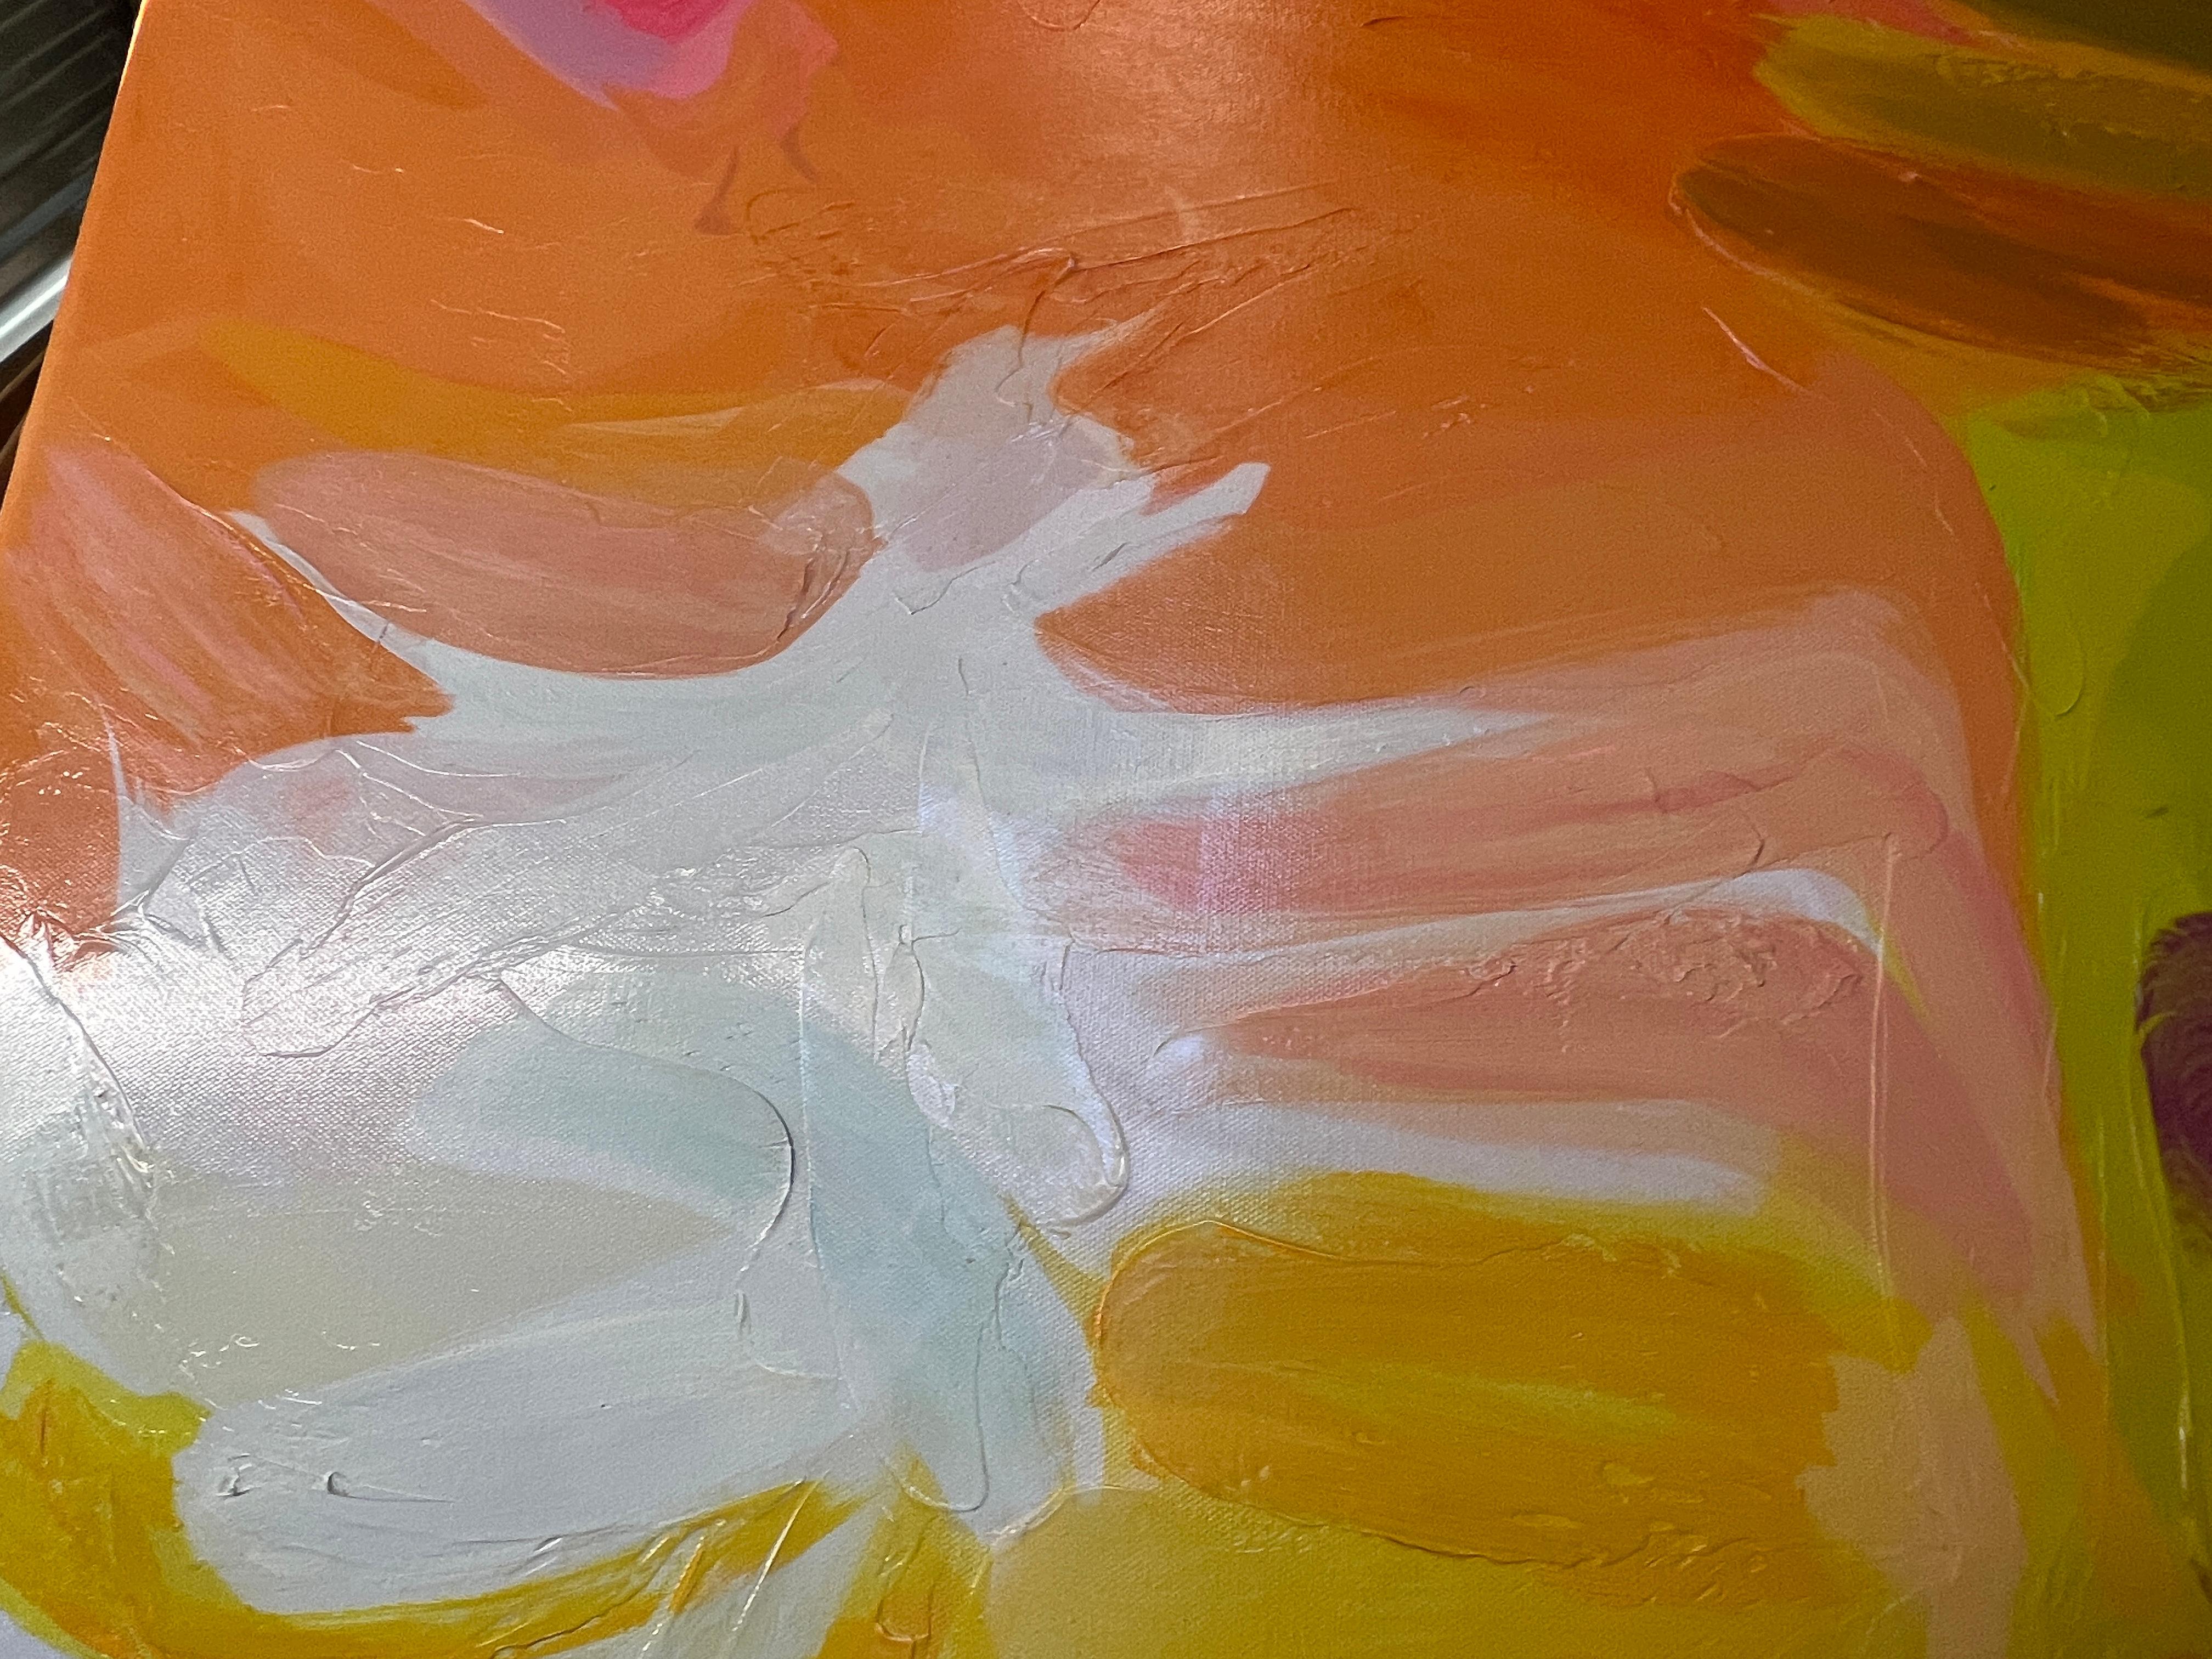 Yellow Green Orange Painting Mixed Media on Canvas 48x48